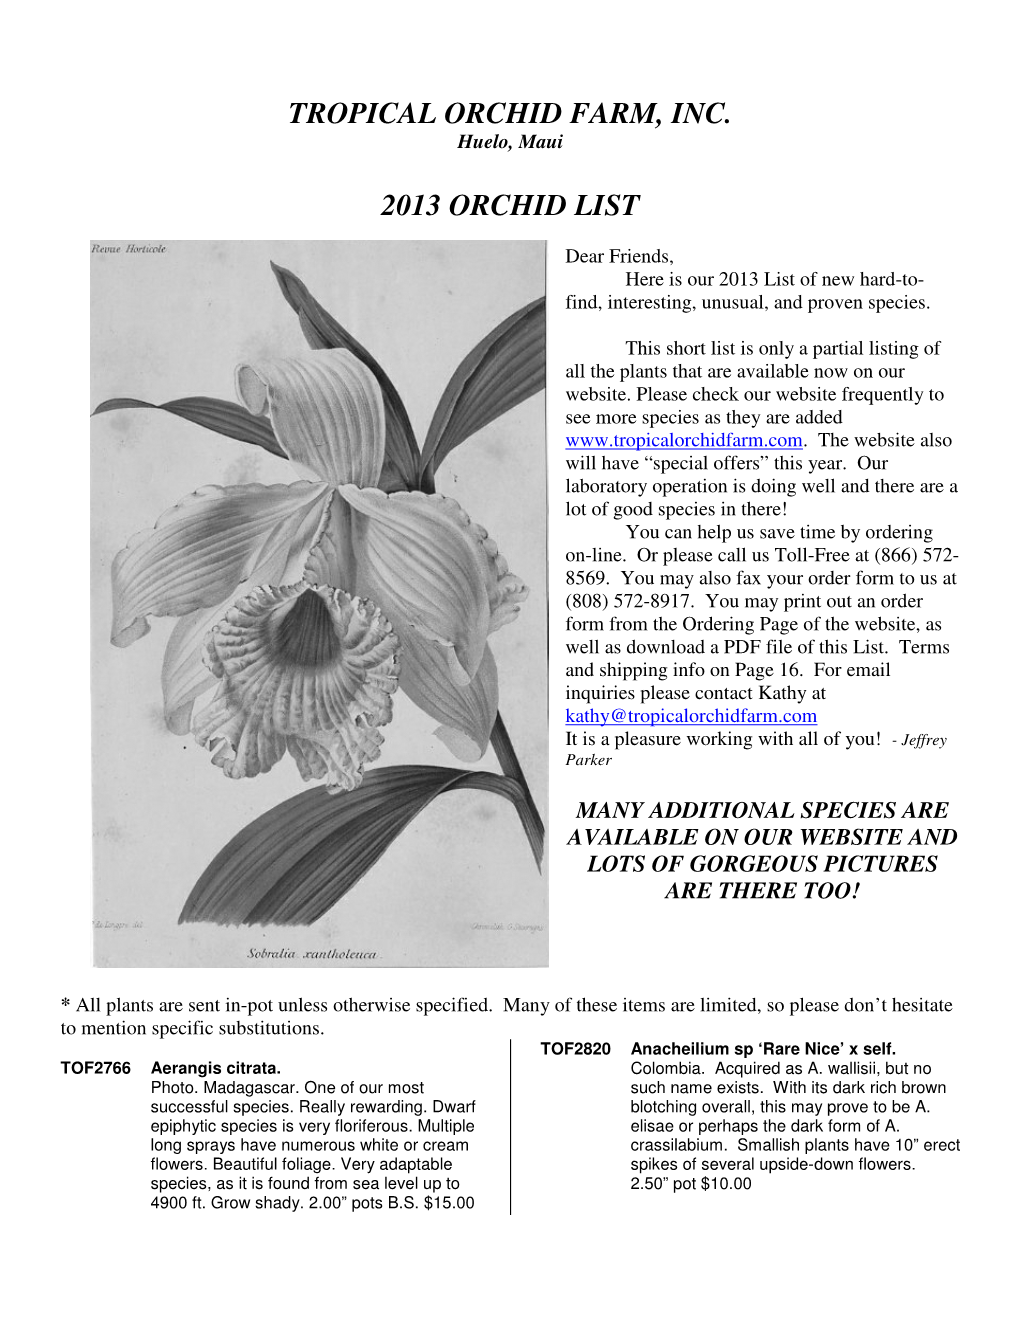 Tropical Orchid Farm, Inc. 2013 Orchid List